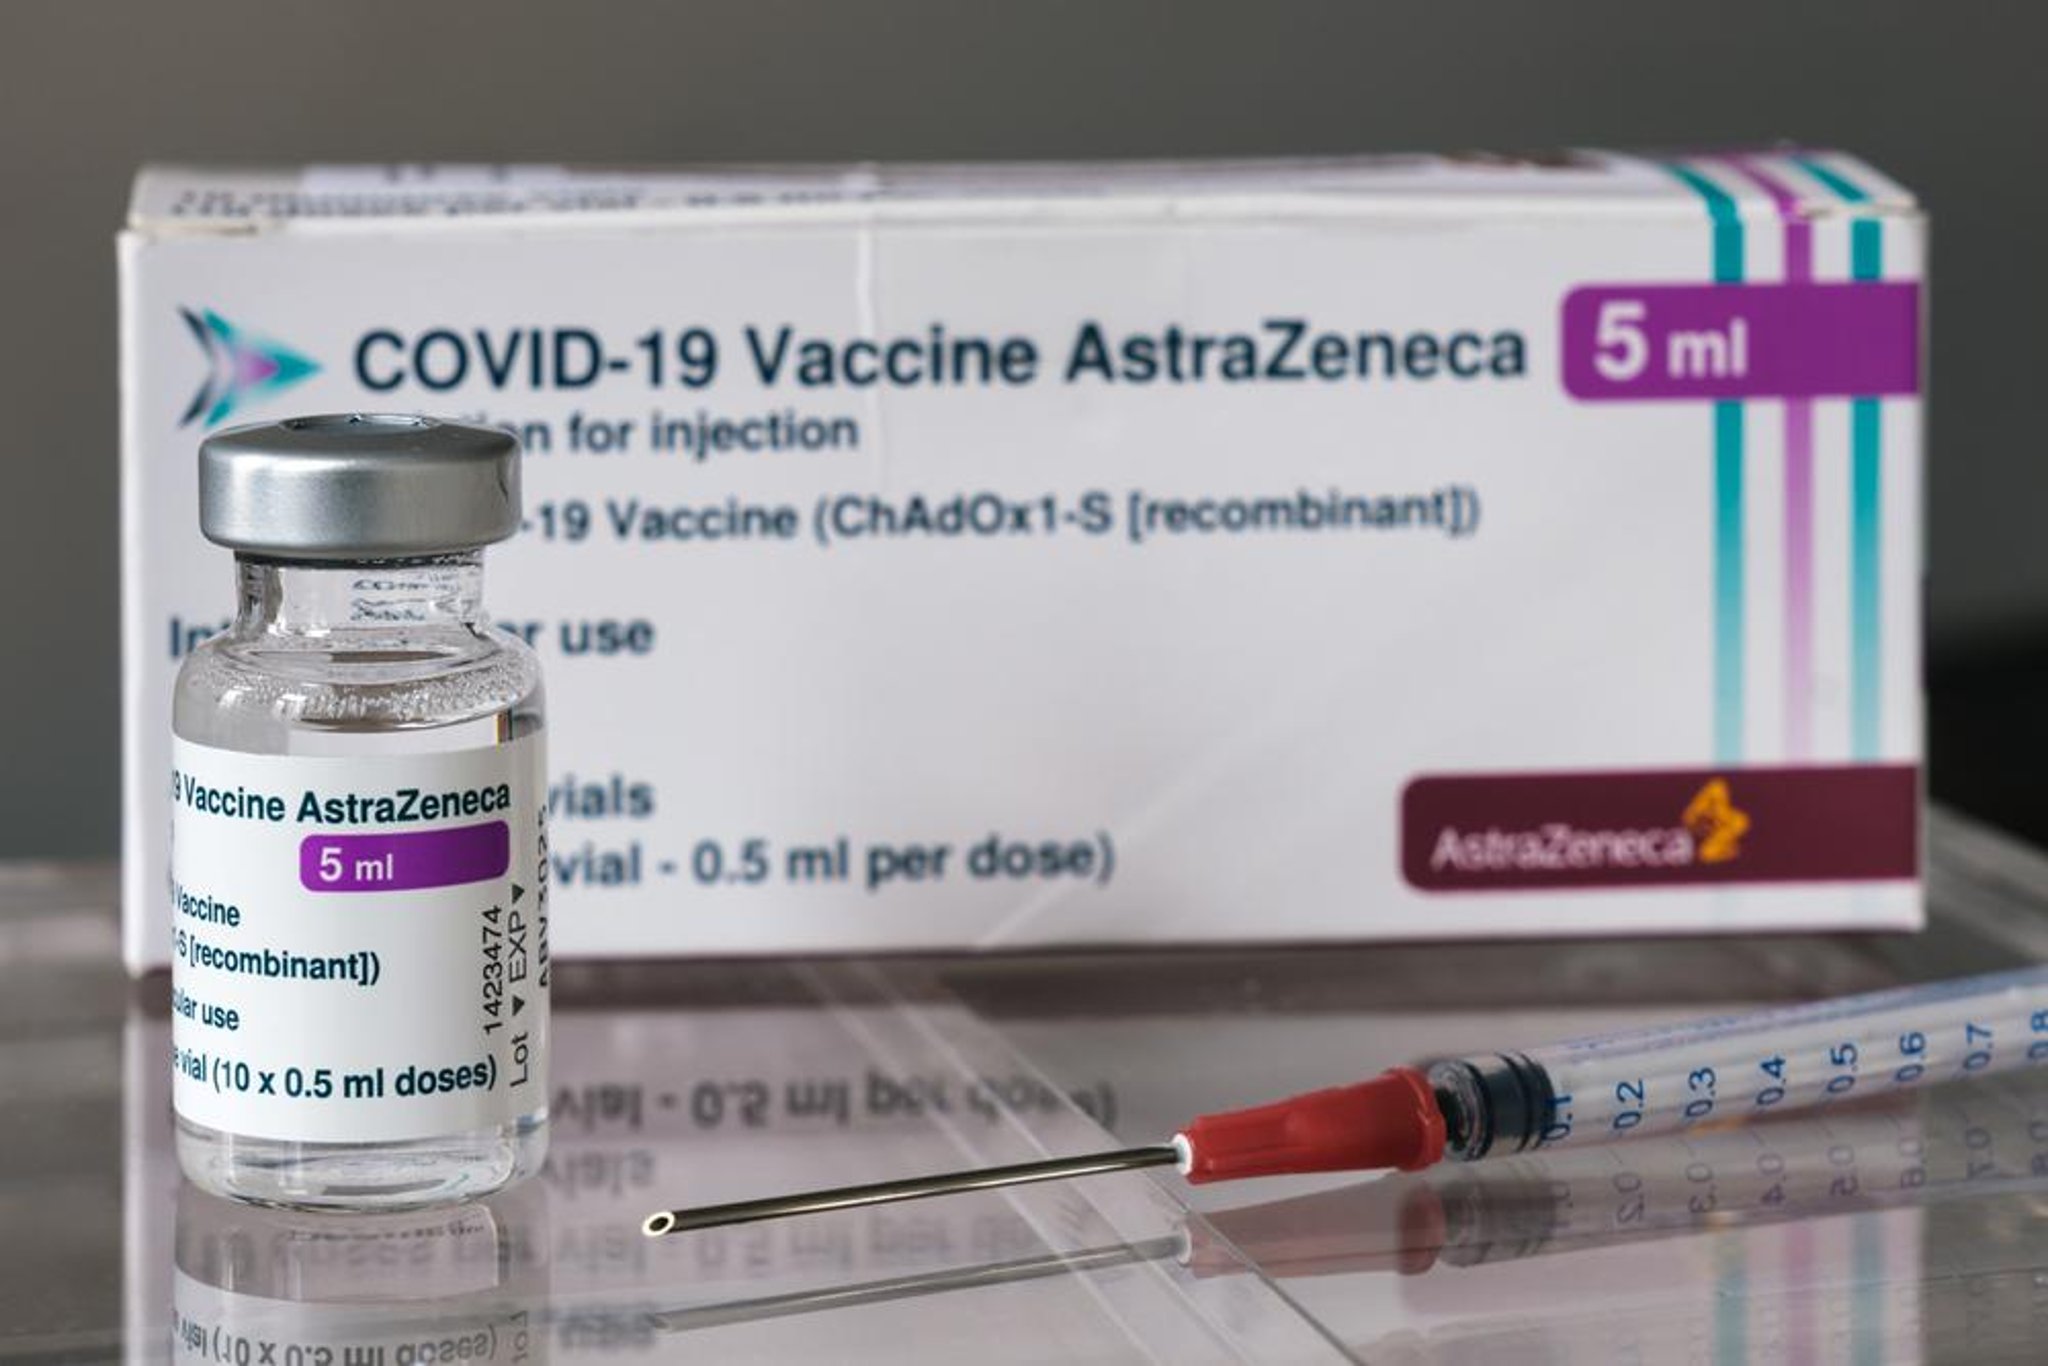 Vaccine which az pv46701 country from Astrazeneca batch